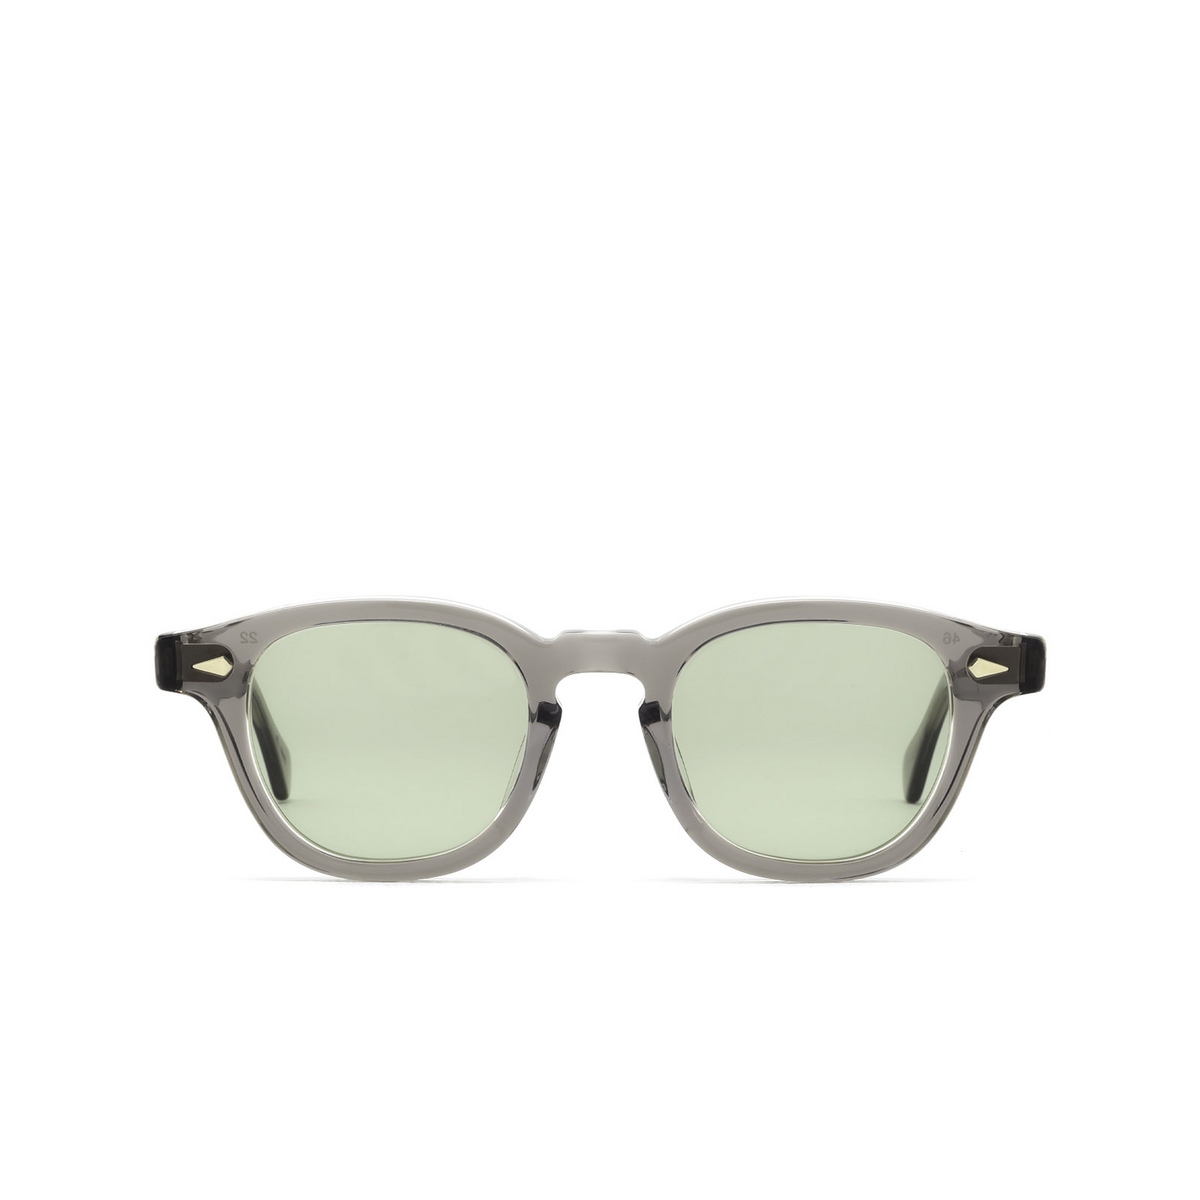 Julius Tart Optical® Square Sunglasses: Ar Sun color Grey Crystal Ii - front view.